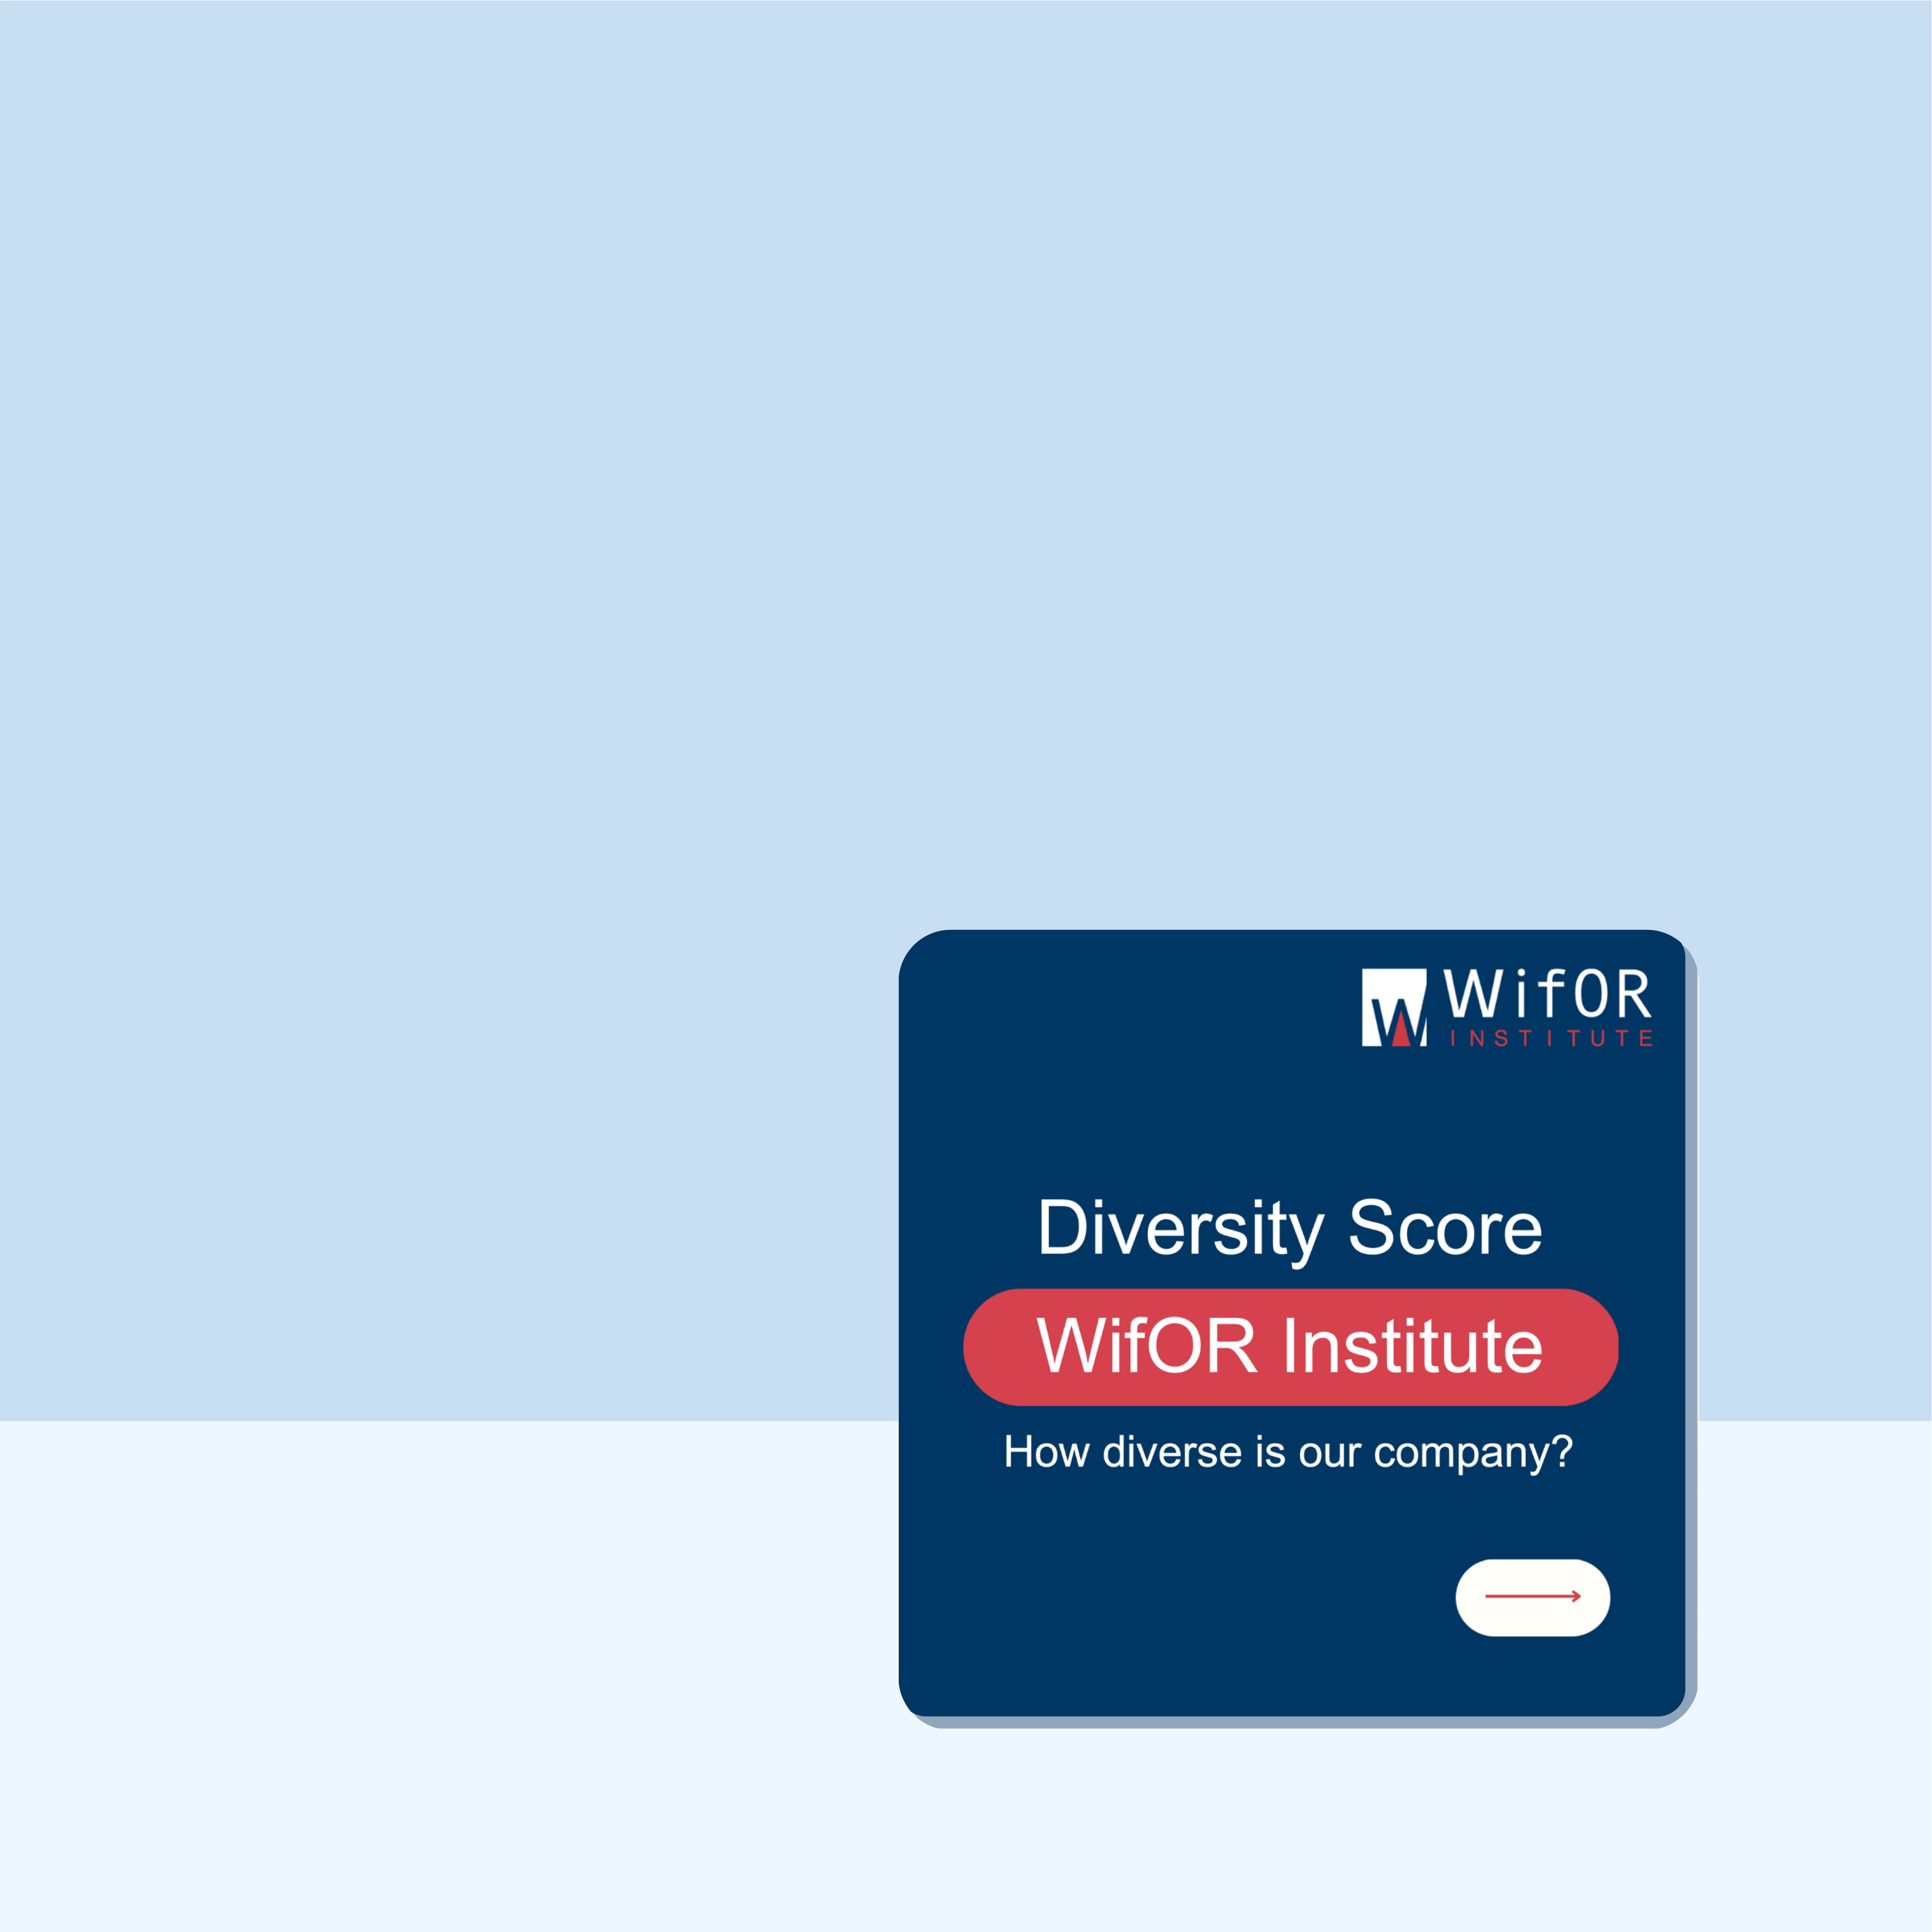 WifOR's Diversity Score